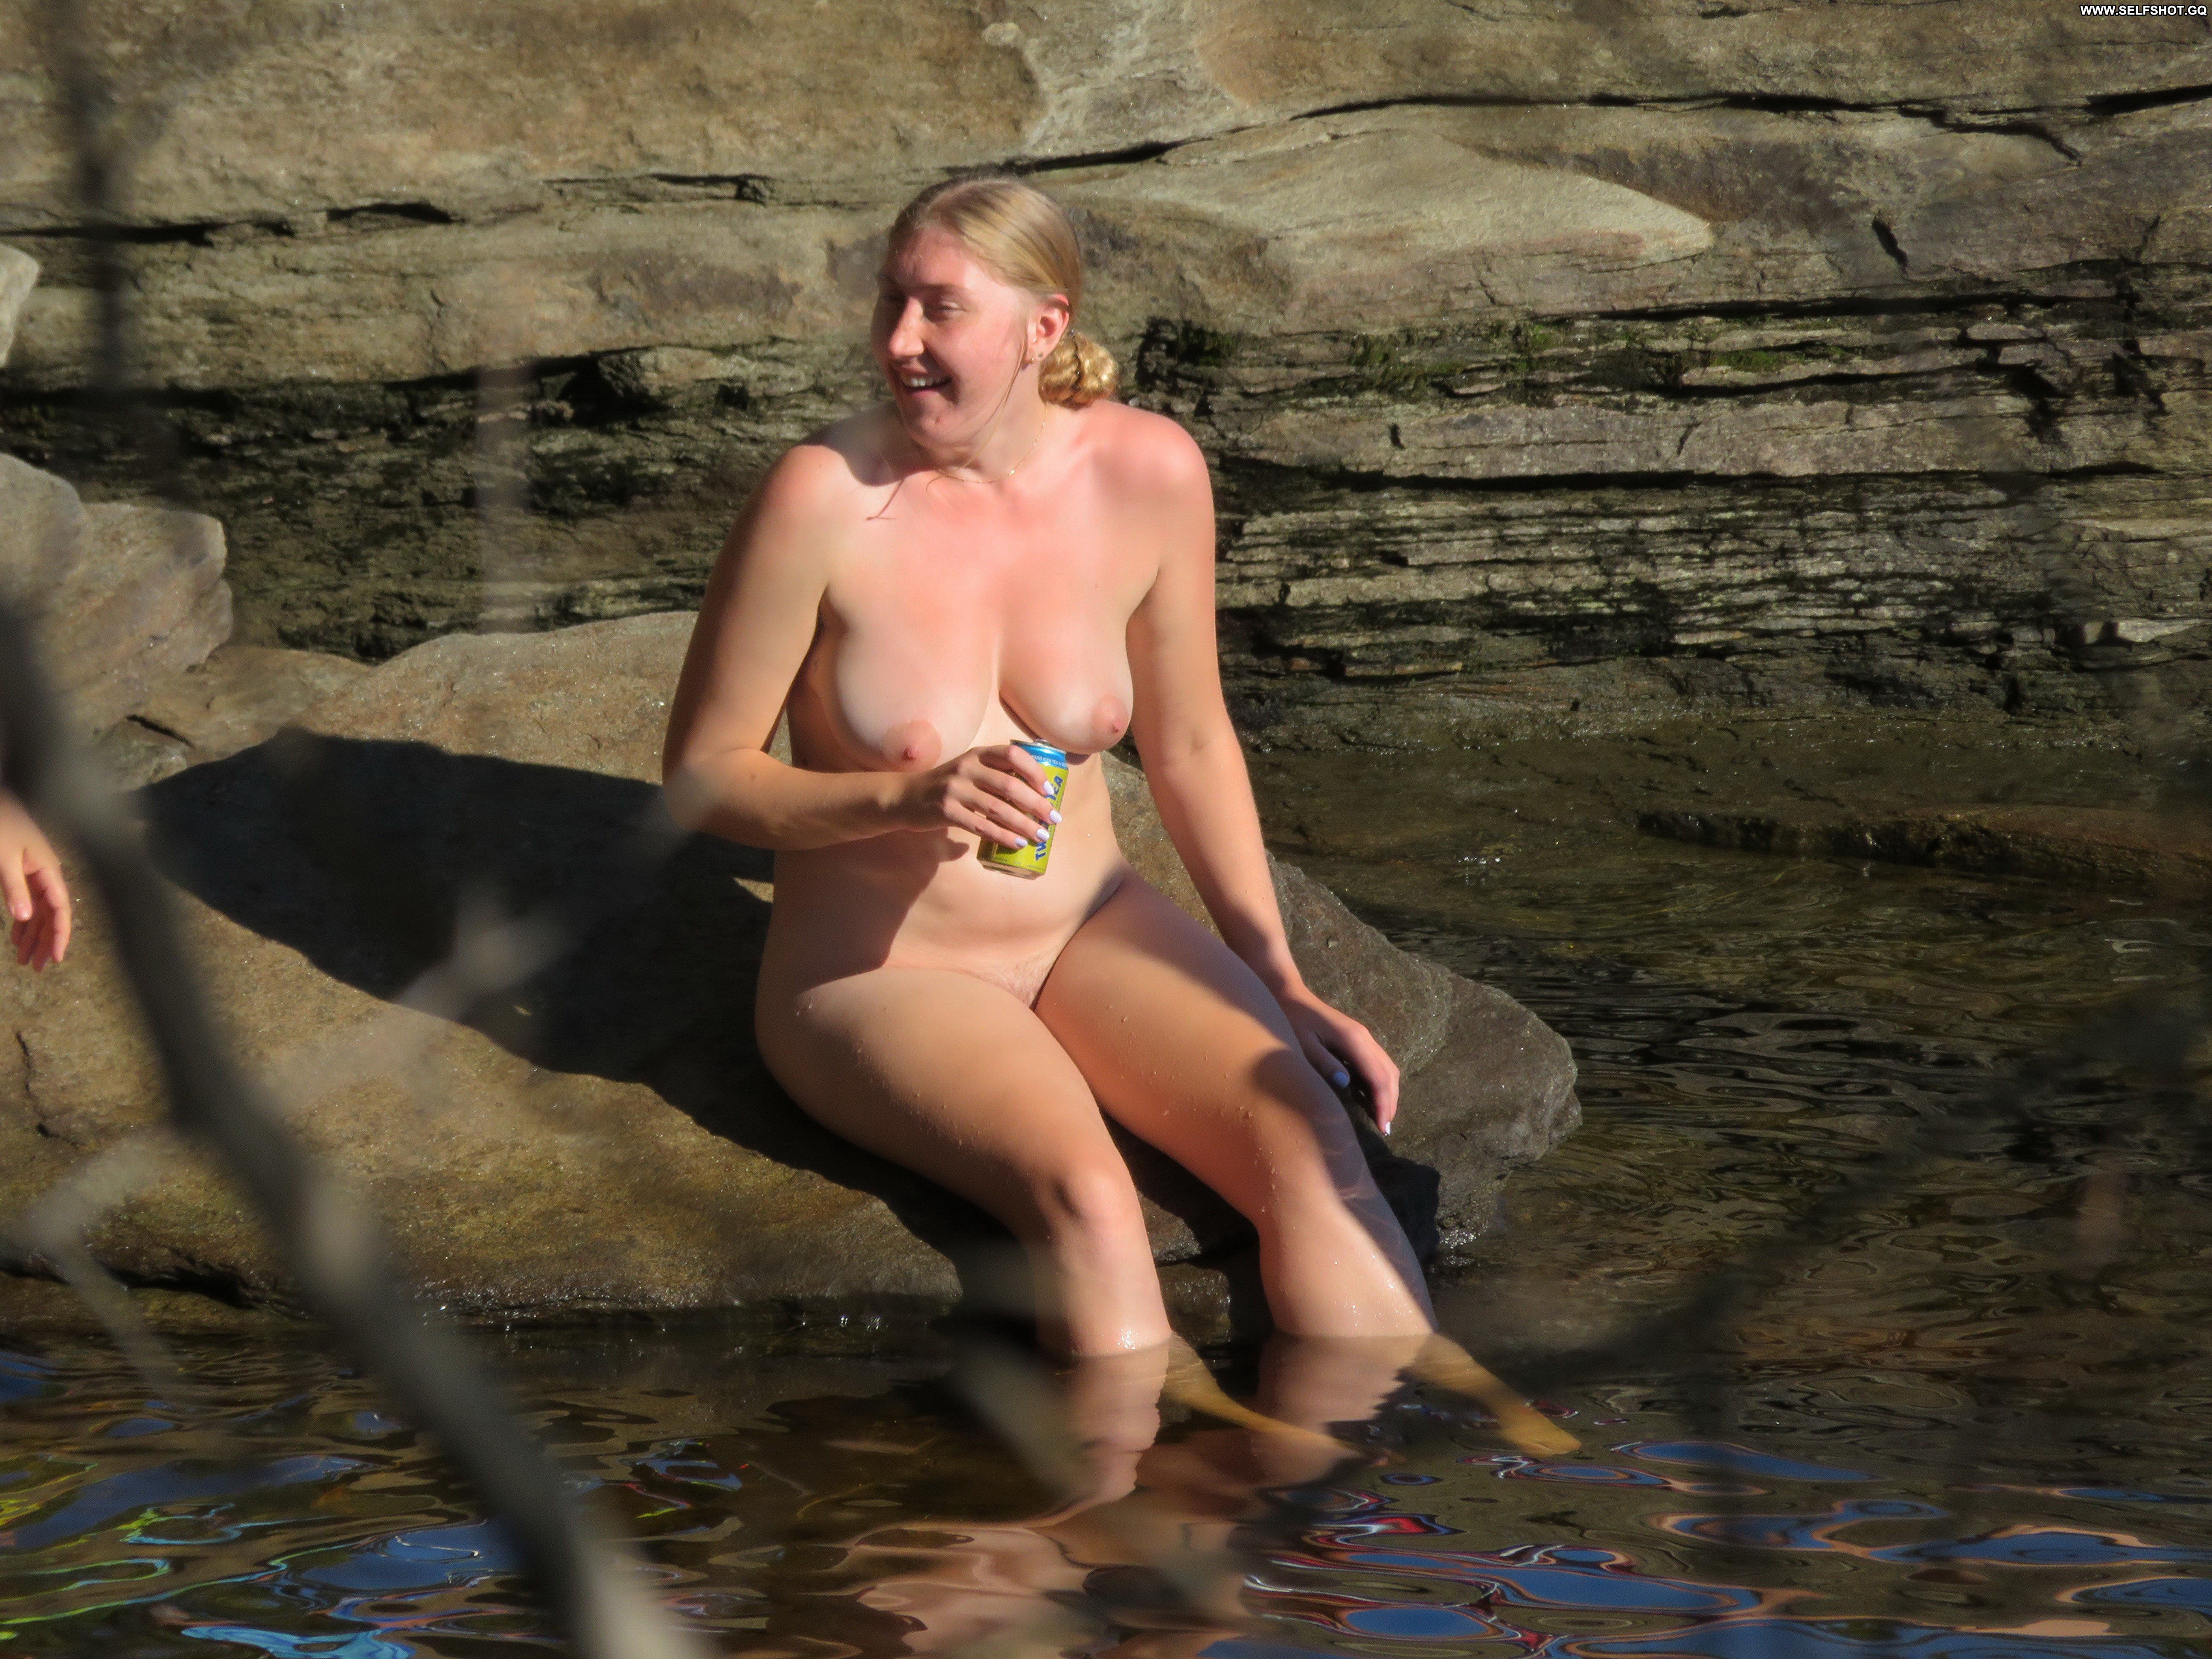 Leontine Public Girls Hot Nude Public Caught Pussy Nudity Lake image